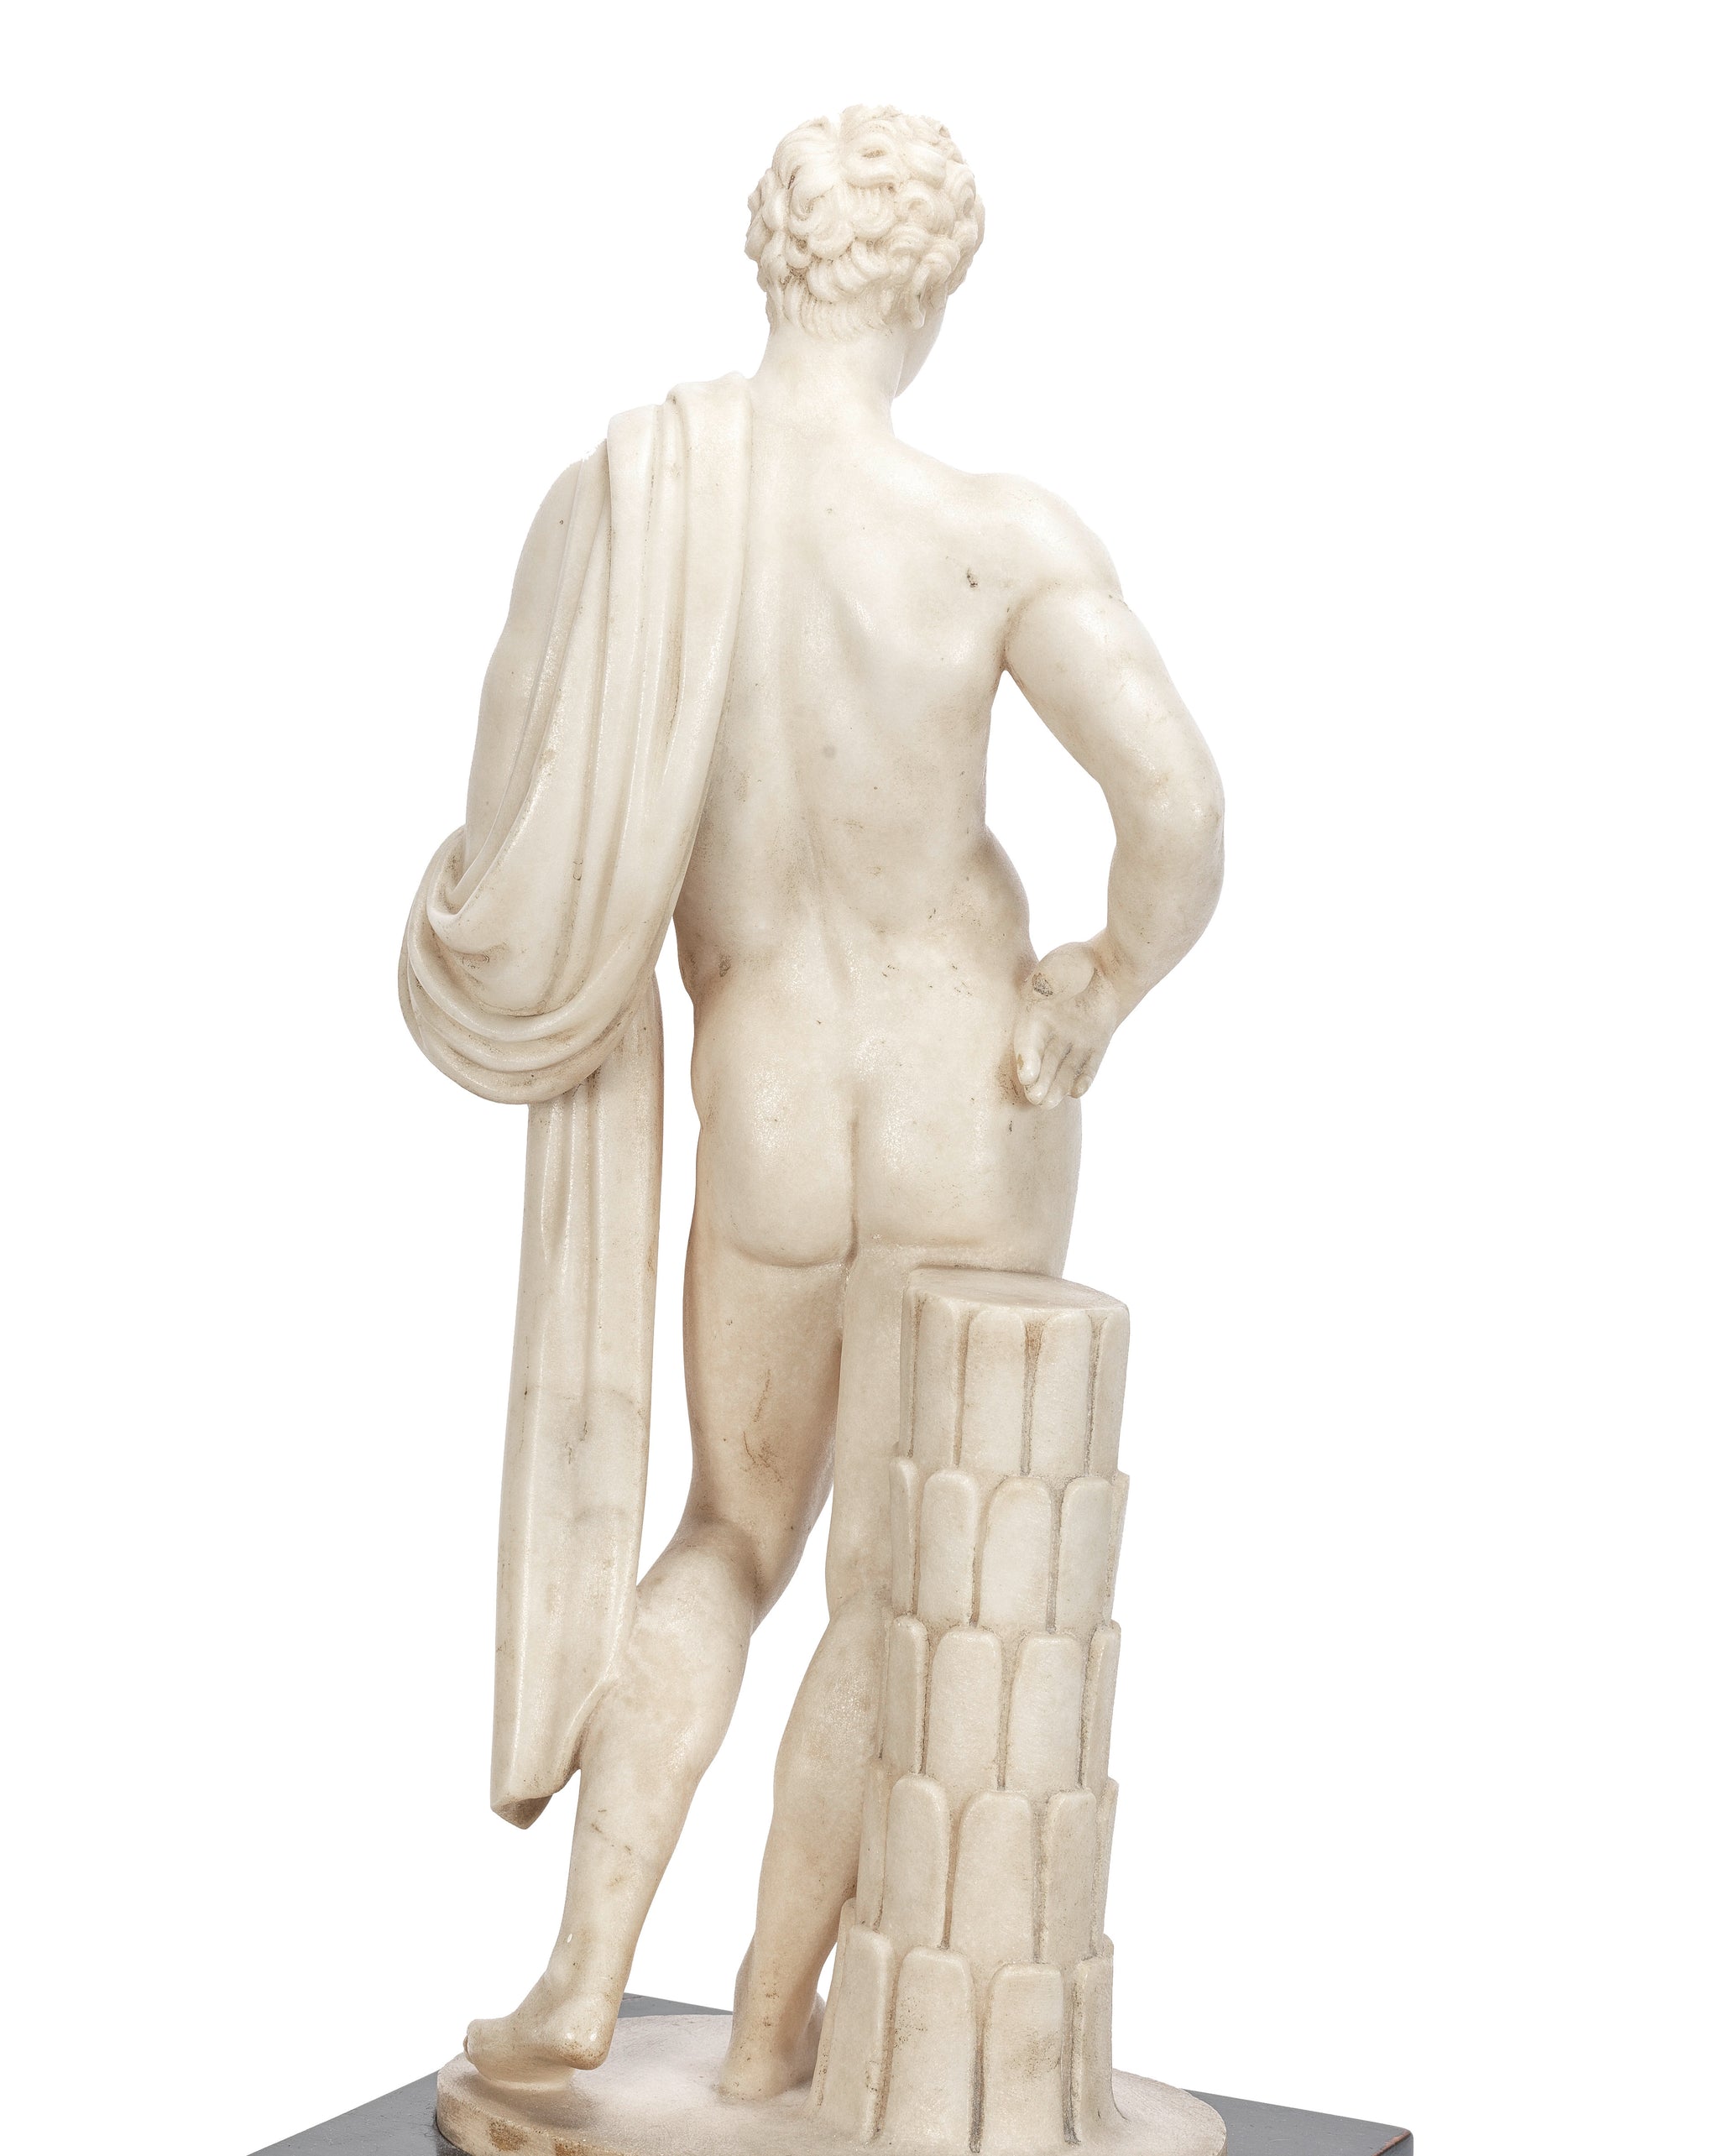 Carved Marble Figure of Hermes